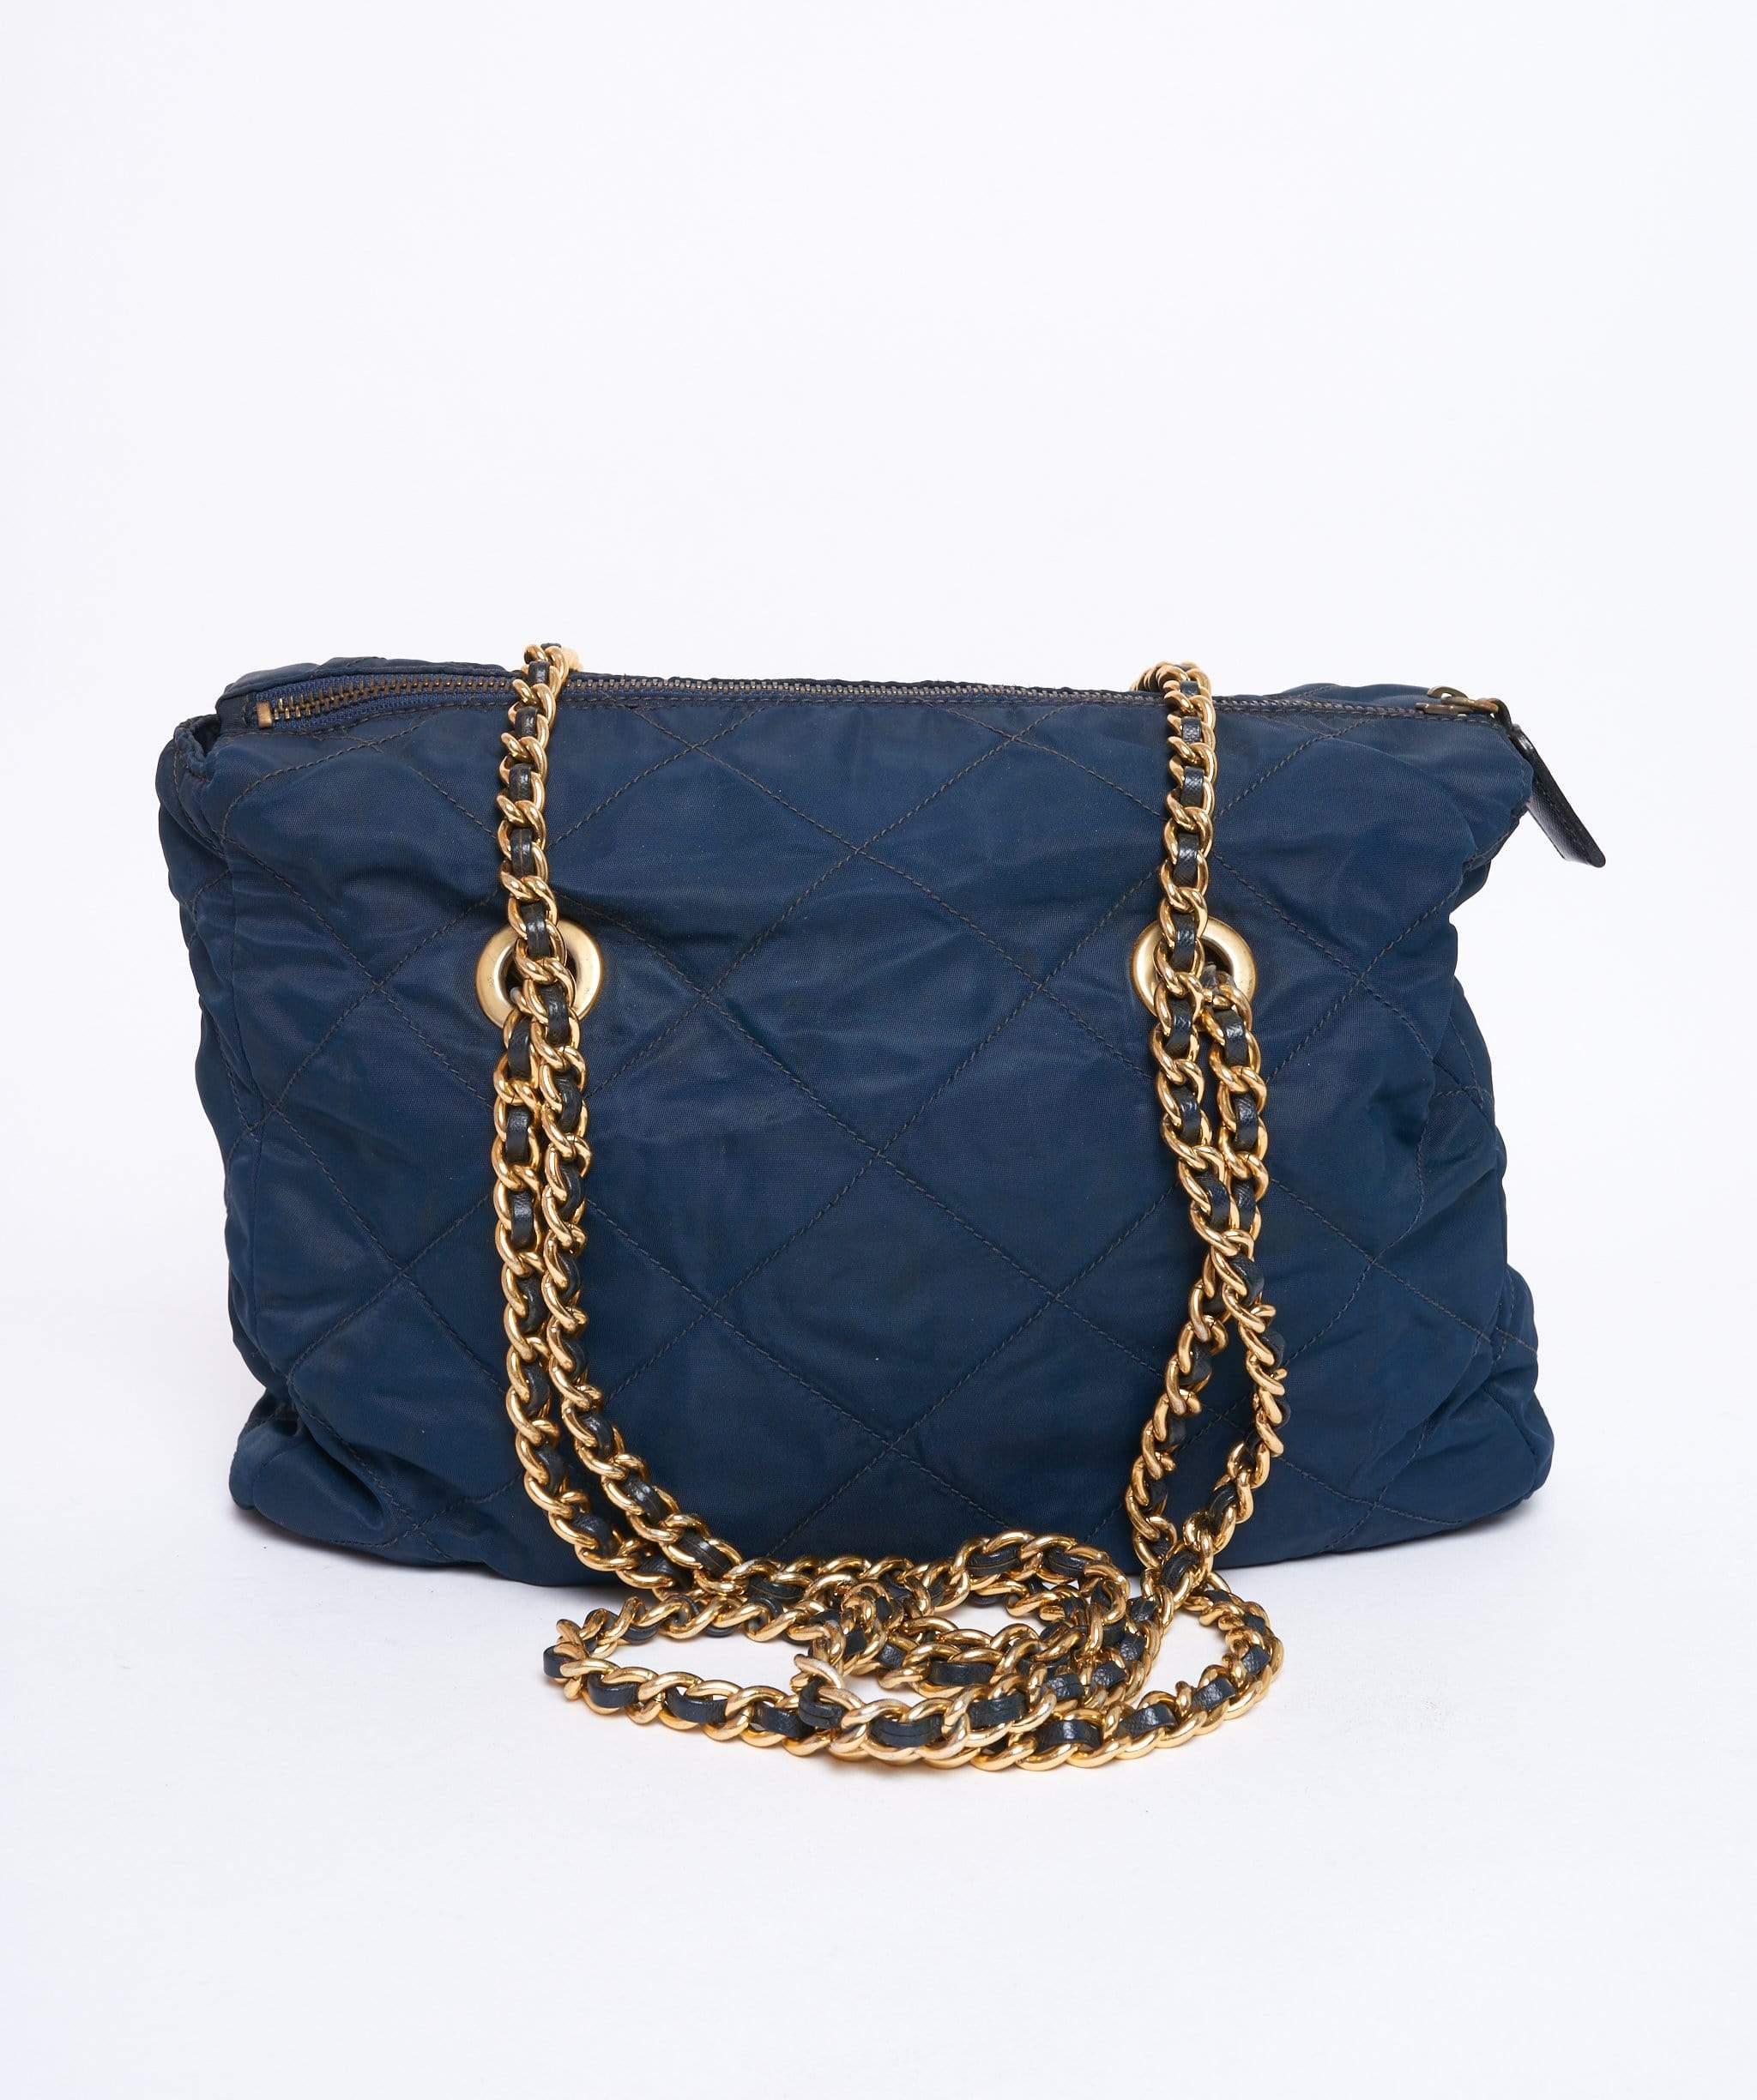 Prada Prada Navy Nylon Quilted Shoulder Bag 12